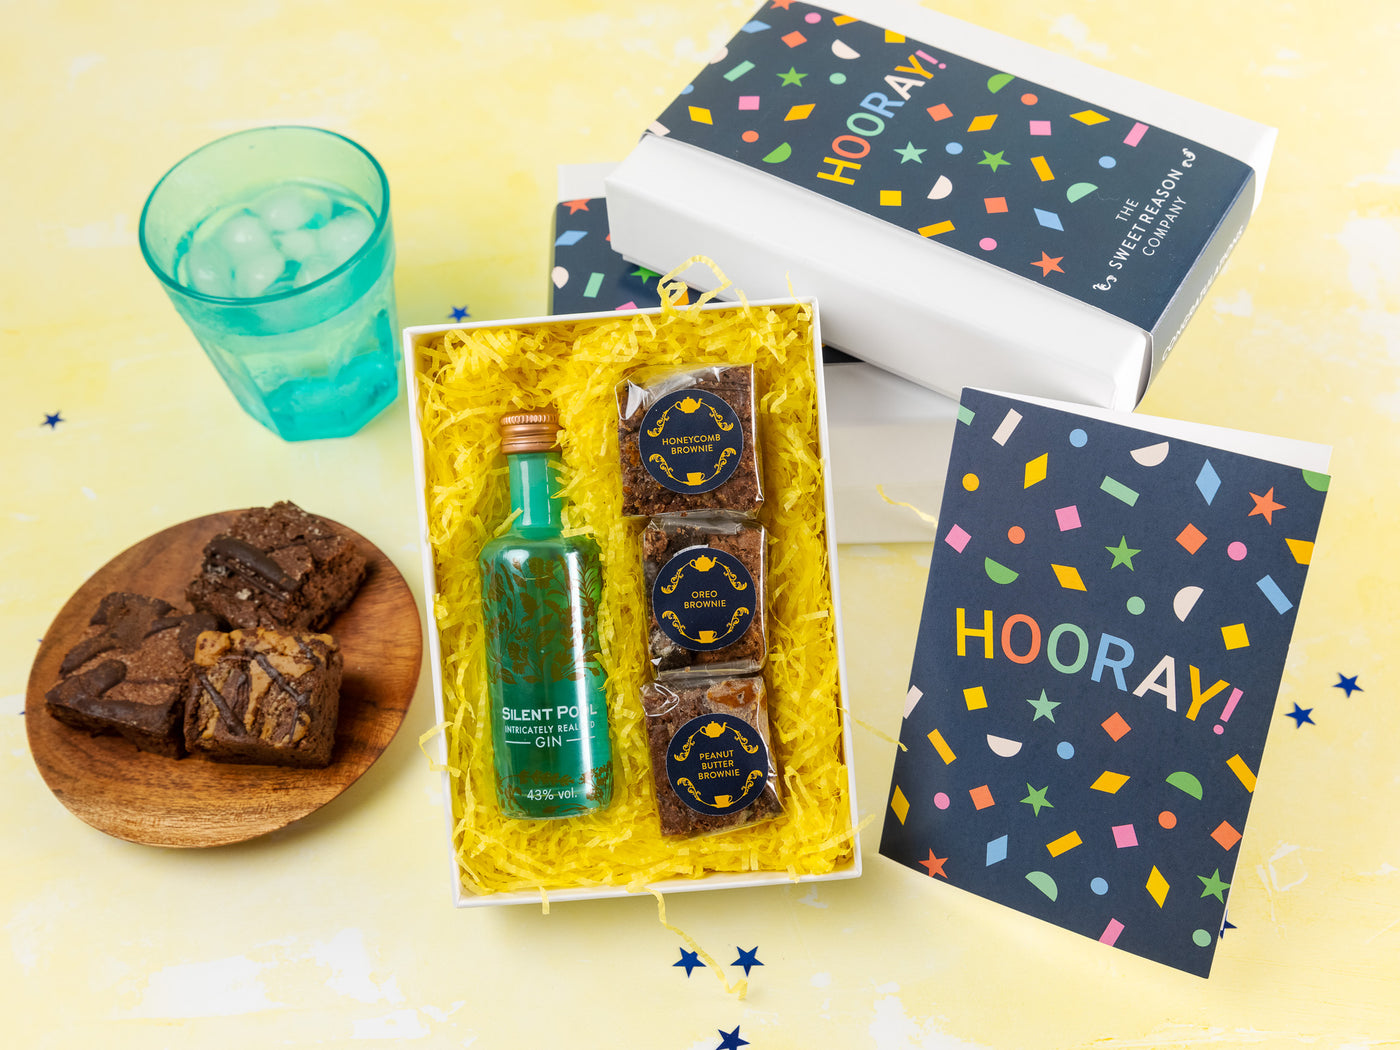 'Hooray!' Gluten Free Brownies & Gin Gift